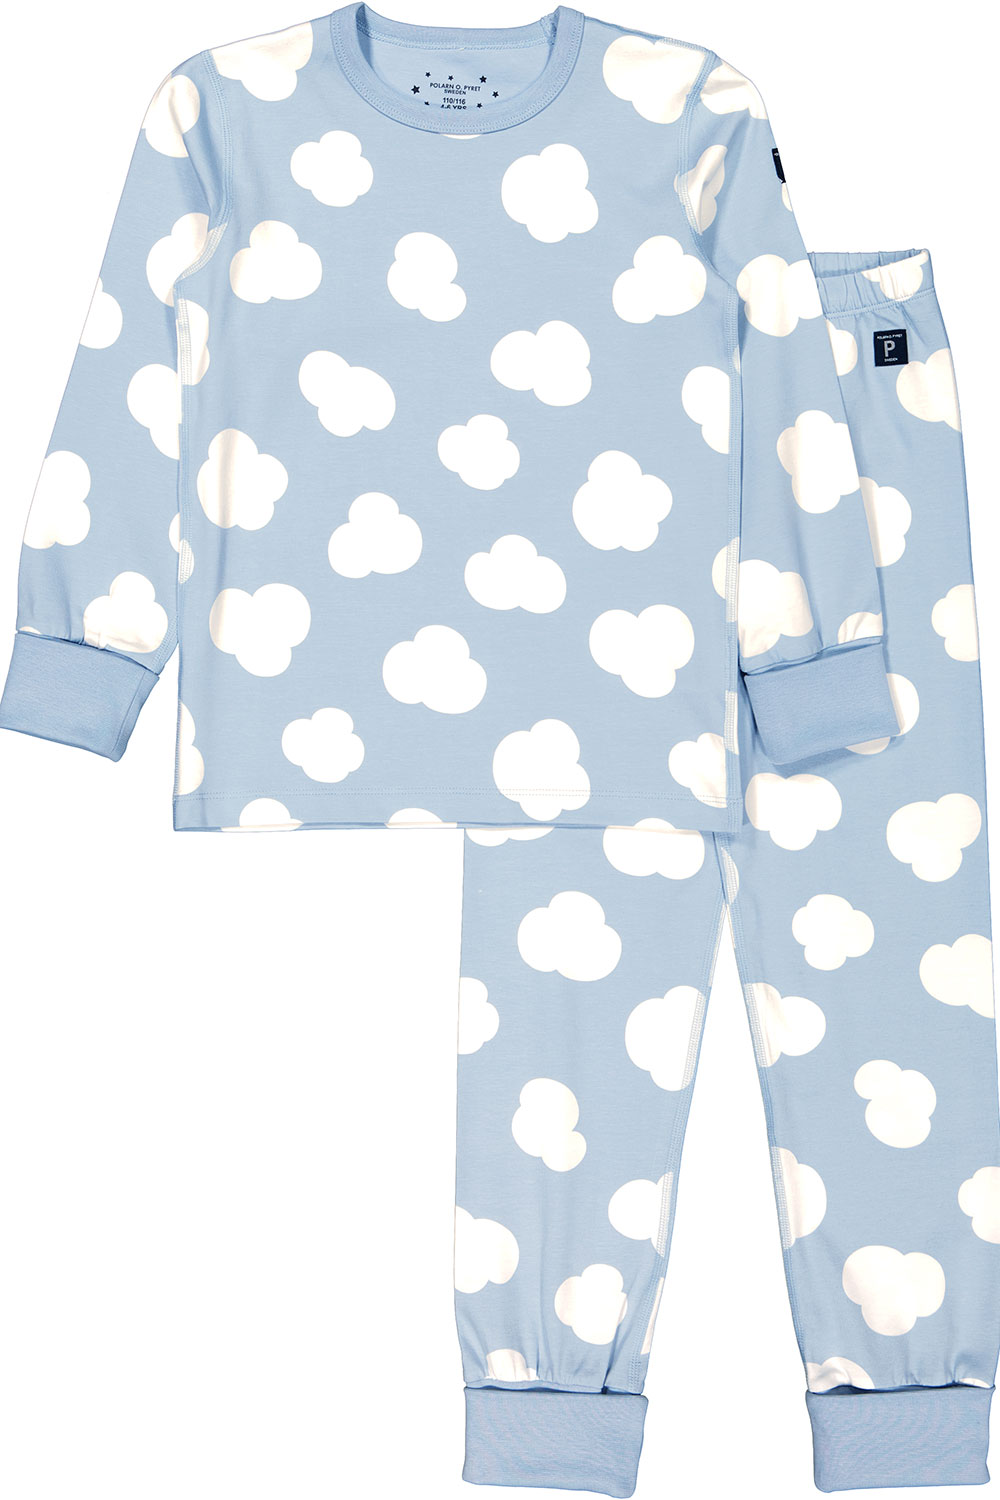 Pale blue pyjamas with white cloud patter